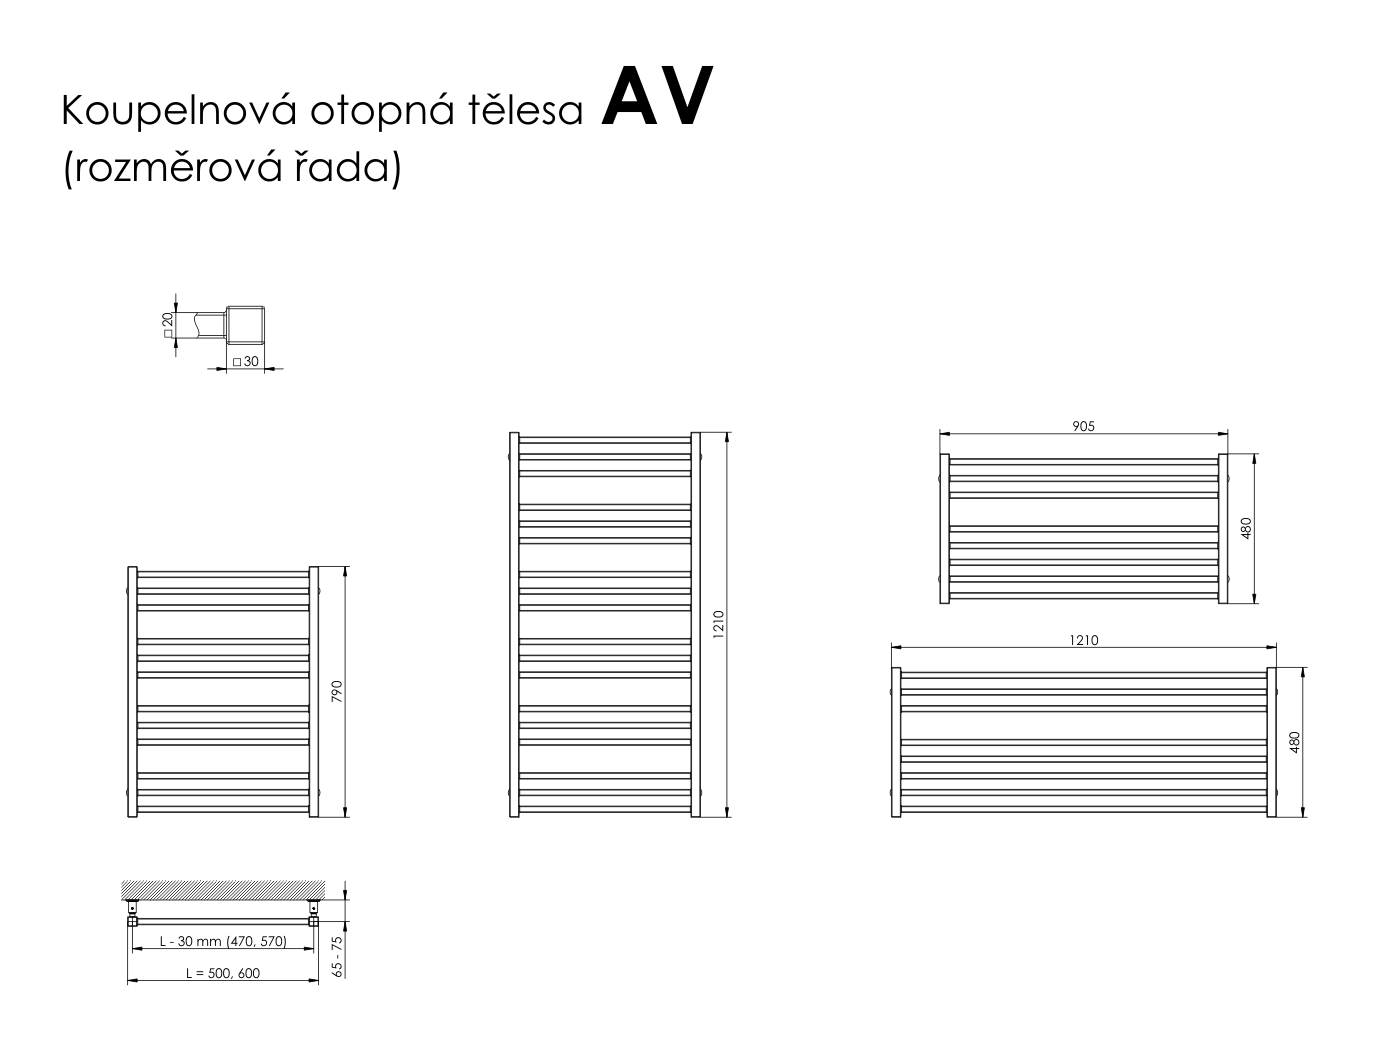 Rozměry radiátoru AV